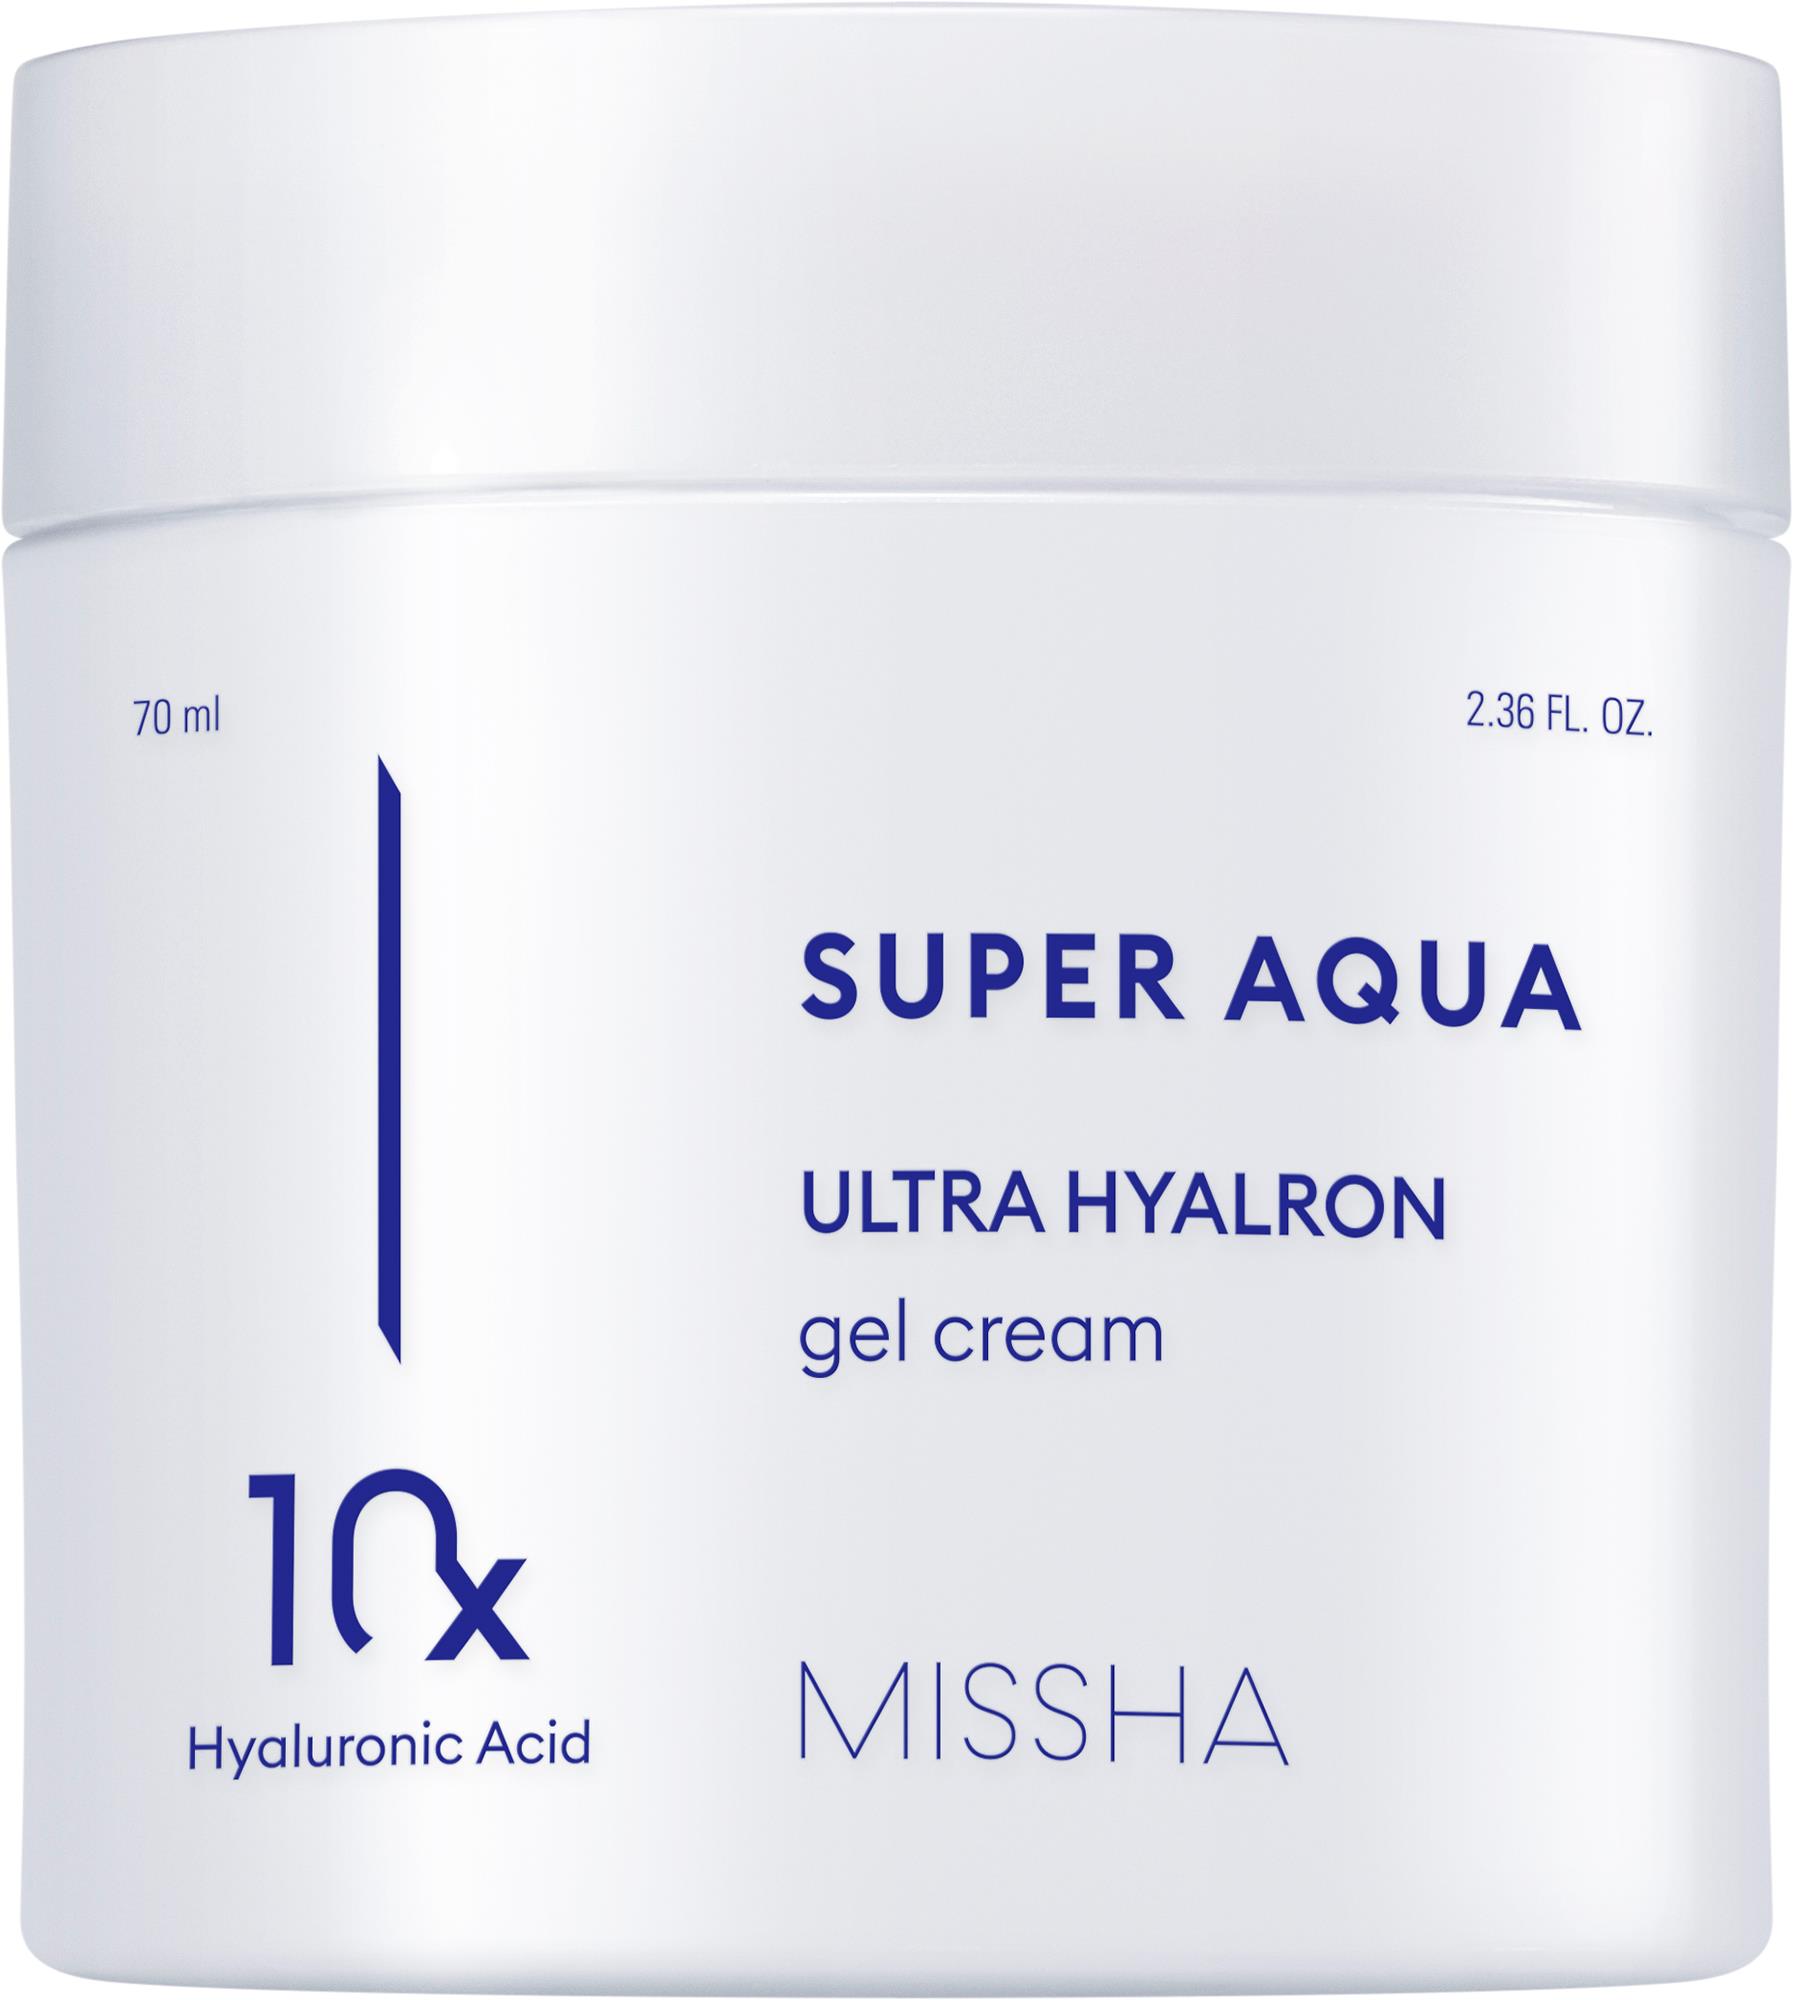 MISSHA Super Aqua Ultra Hyalron Gel Cream 70 ml | lyko.com